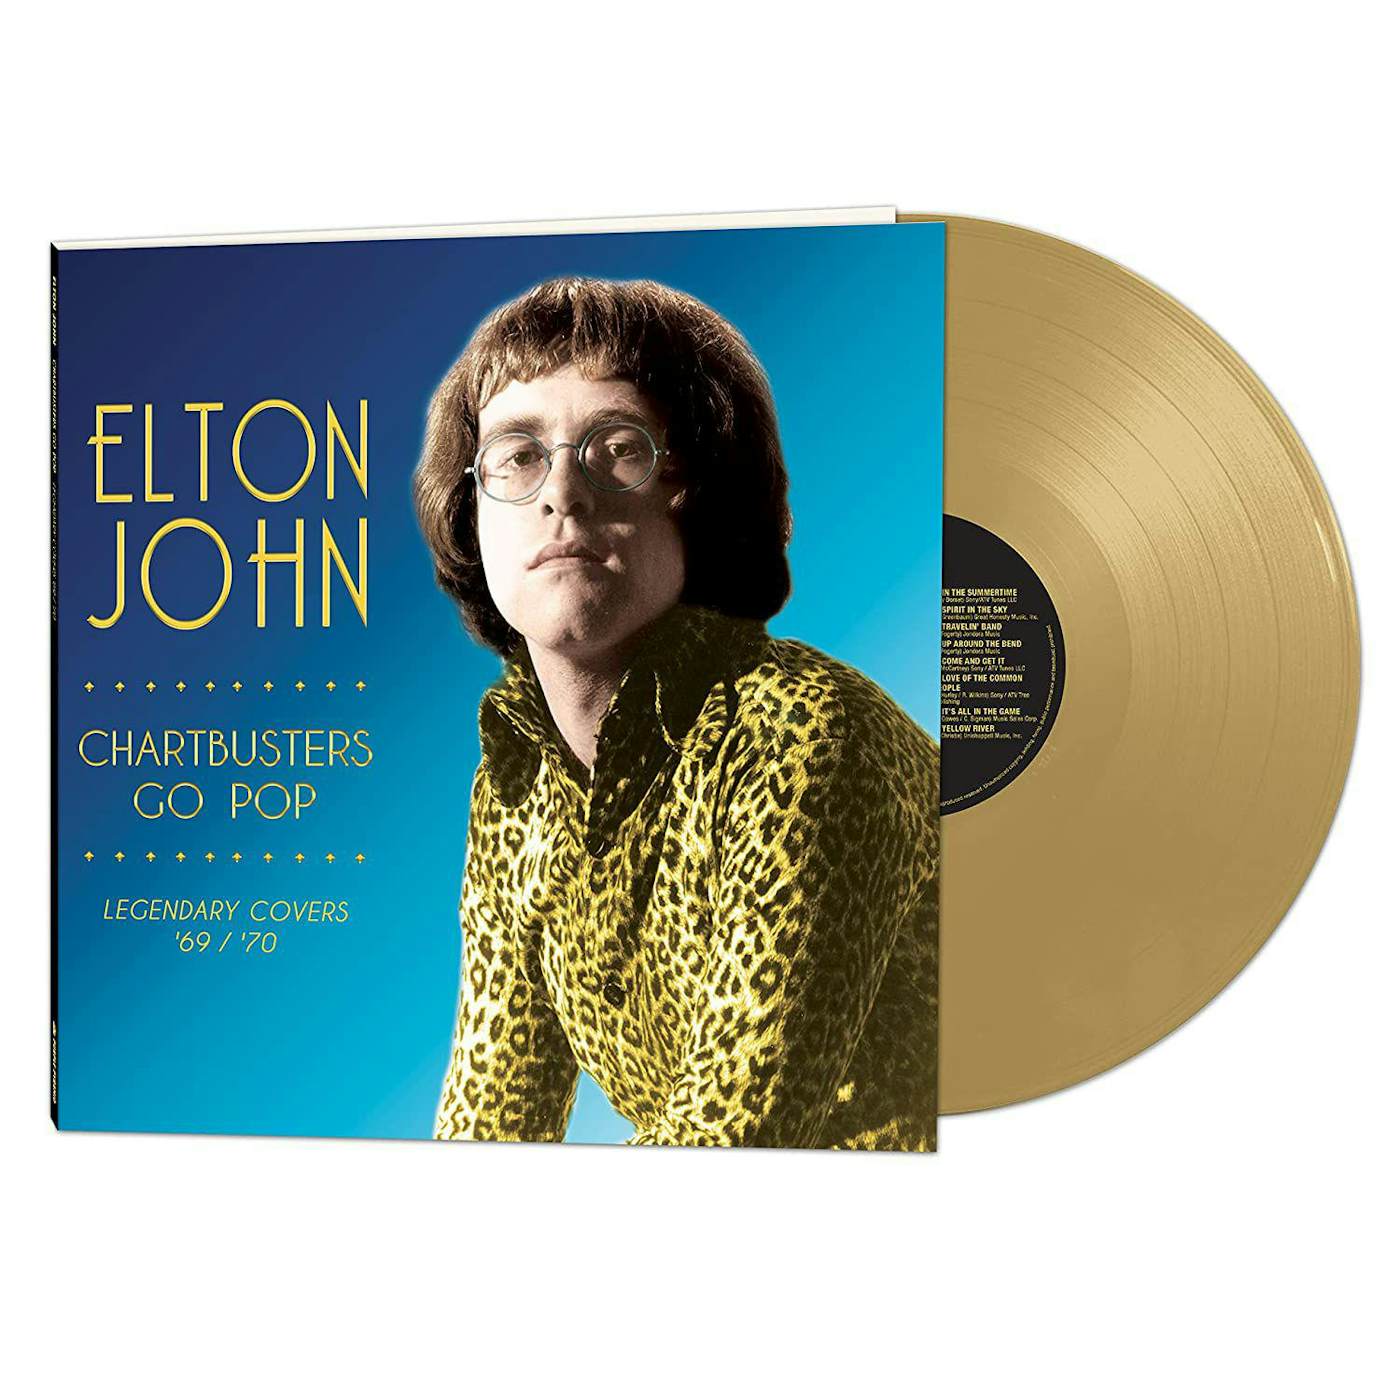 Elton John Chartbusters Go Pop - Legendary Covers '69 / '70 (gold vinyl)